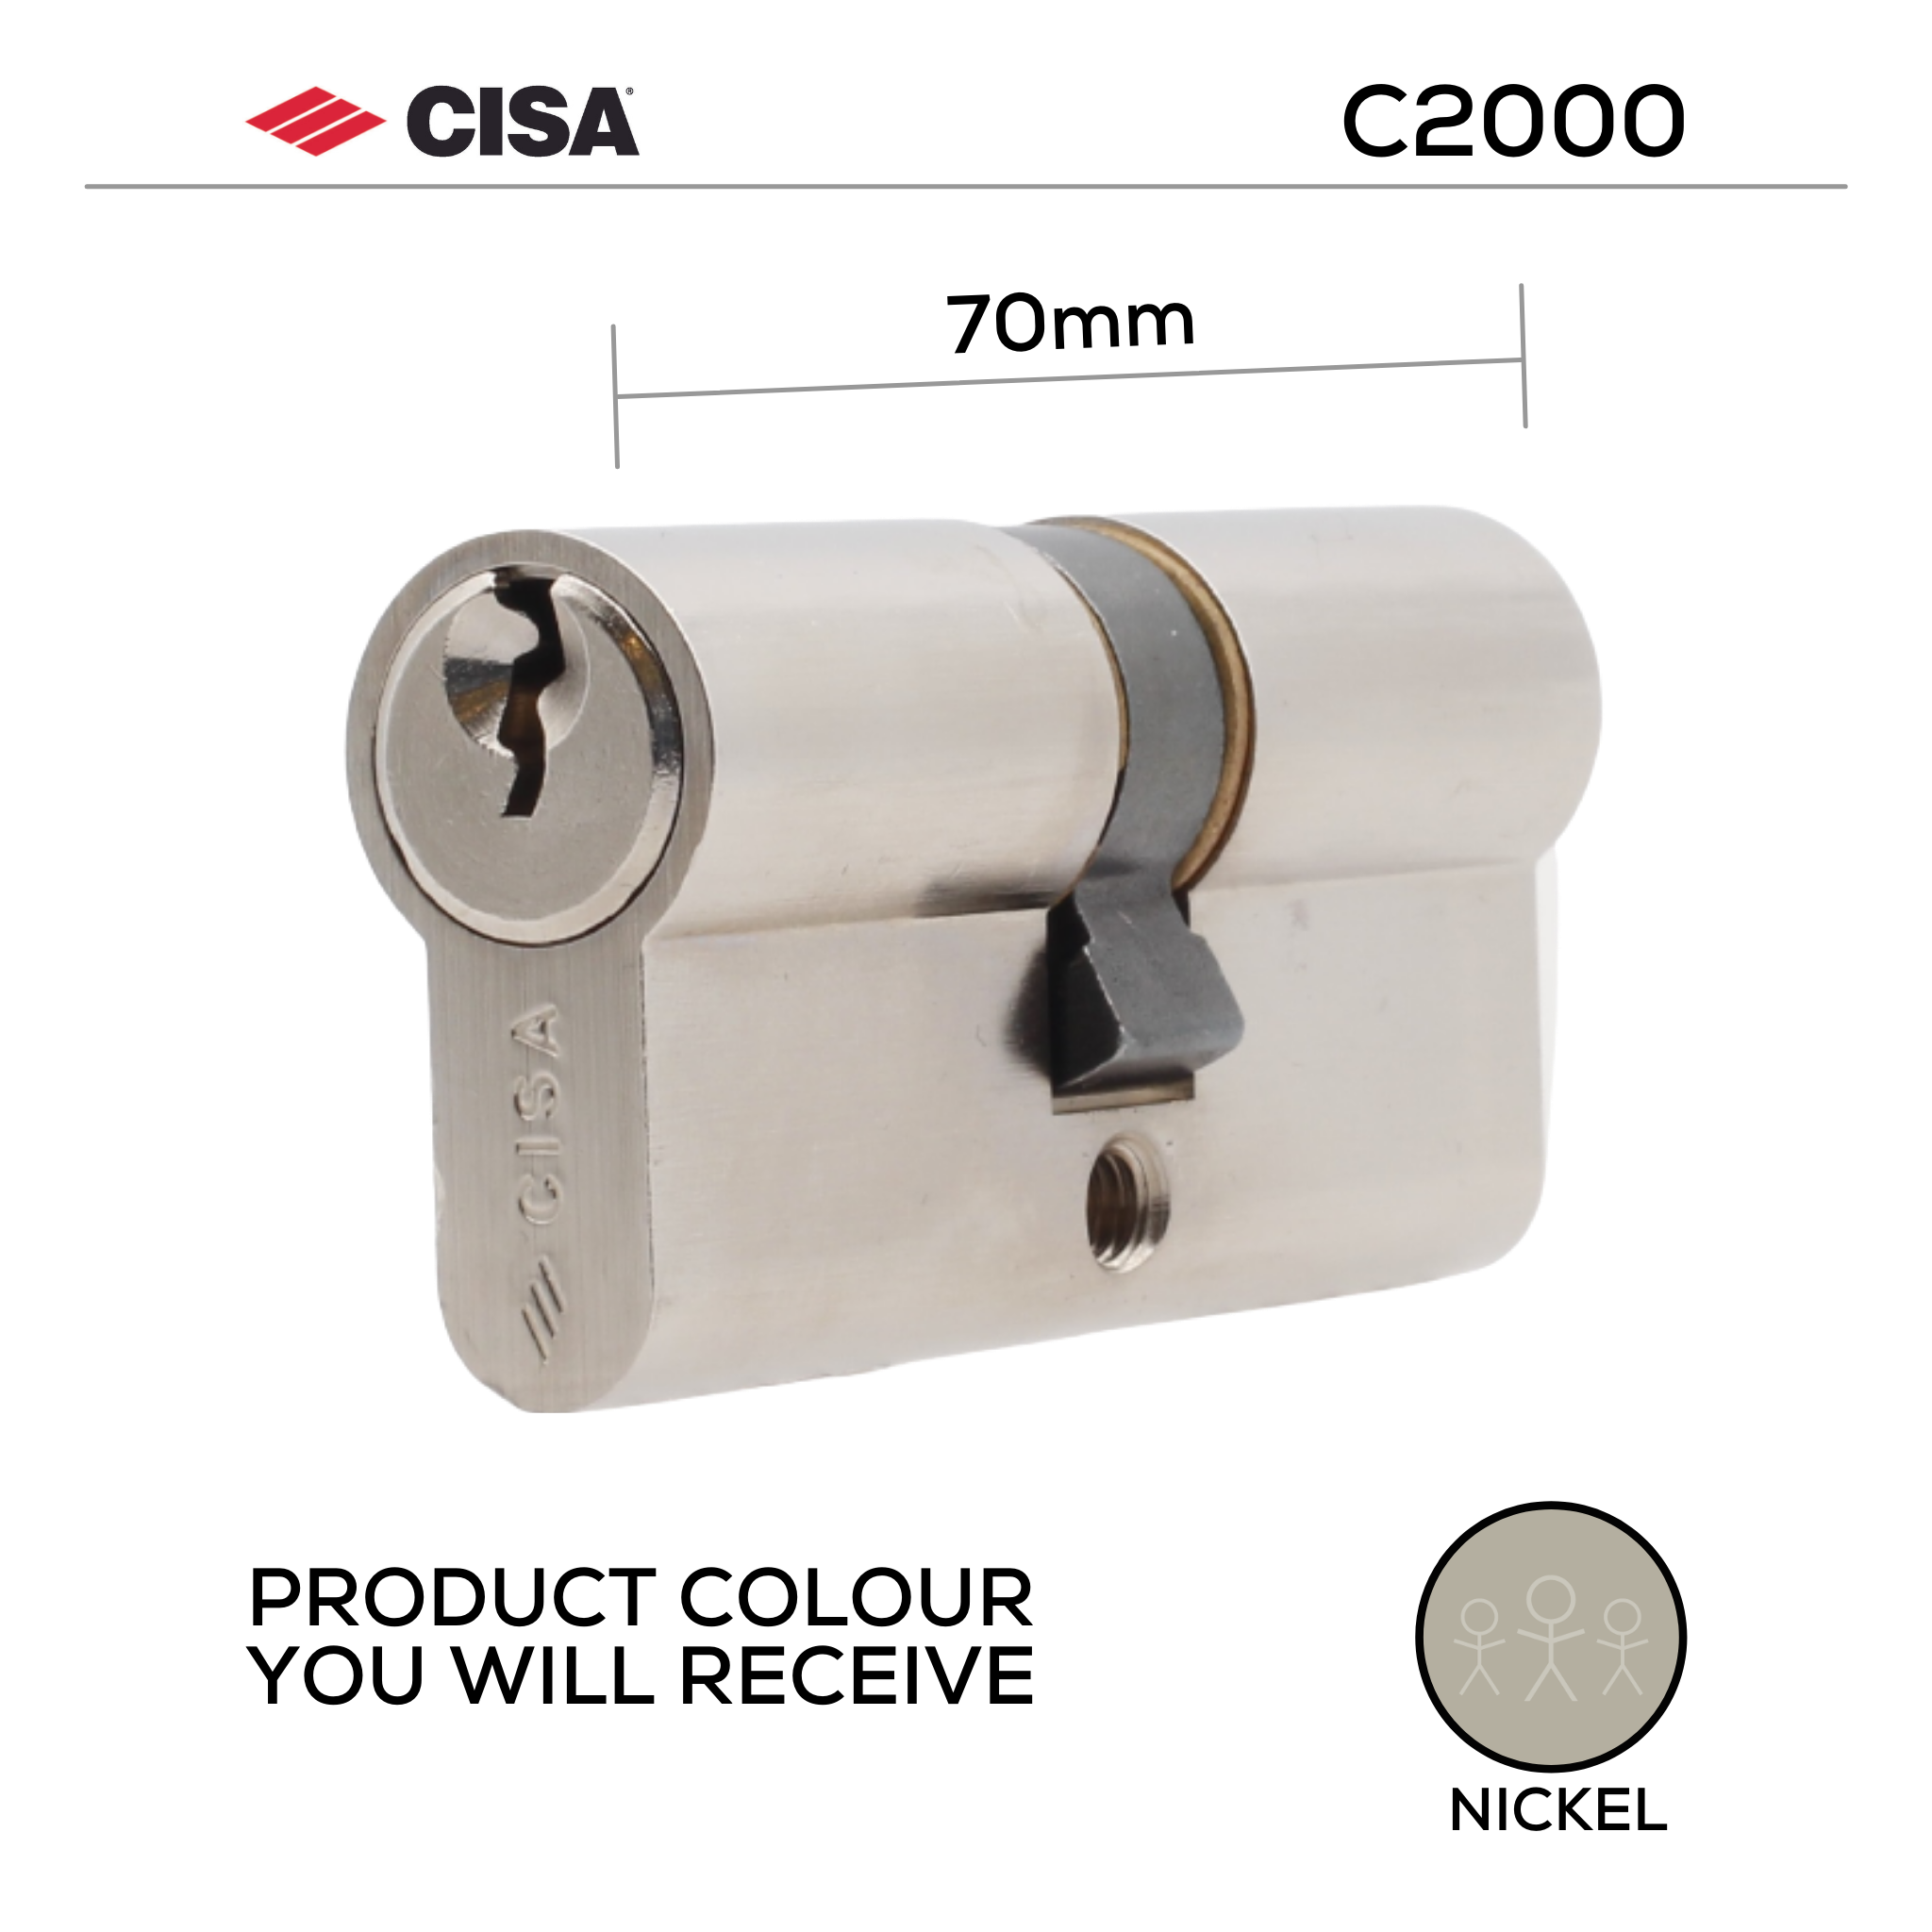 08210-12-12-KD, 70mm - 30/40, Double Cylinder, C2000, Key to Key, Keyed to Differ (Standard), 3 Keys, 5 Pin, Nickel, CISA